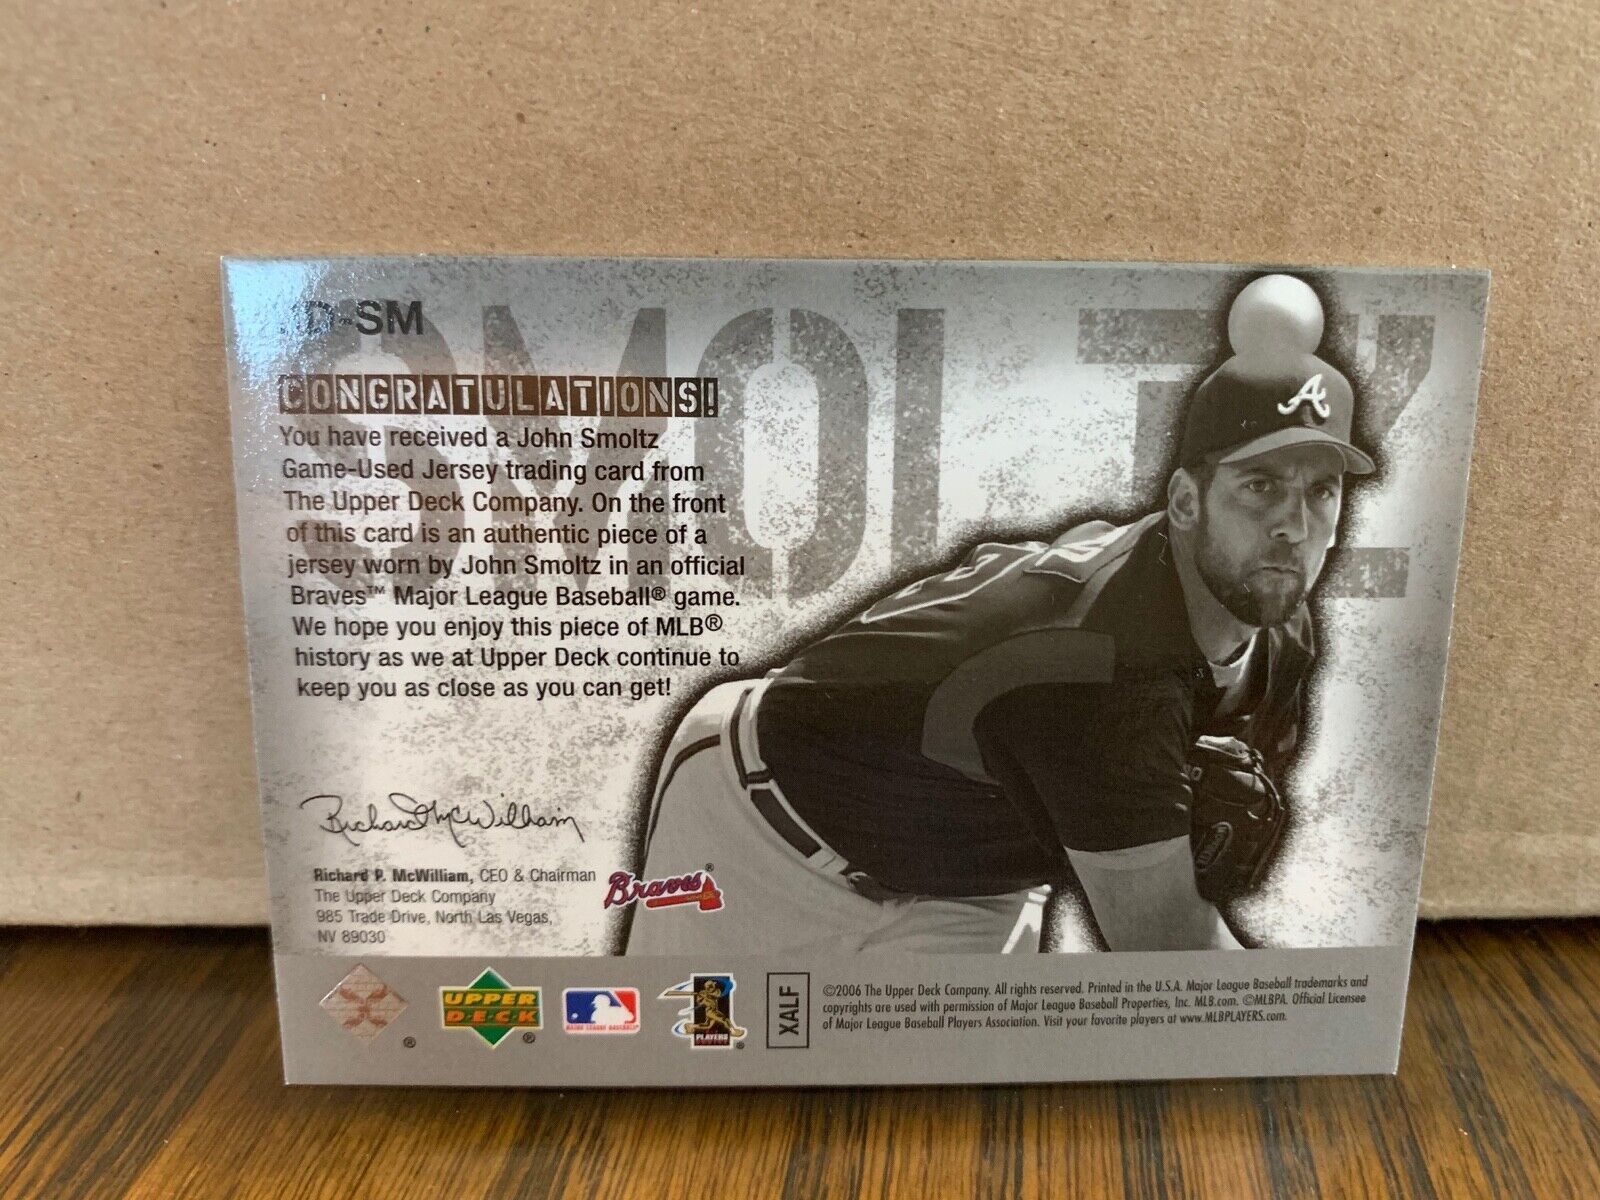 John Smoltz Atlanta Braves 2006 Upper Deck Game Materials Patch Card MLB